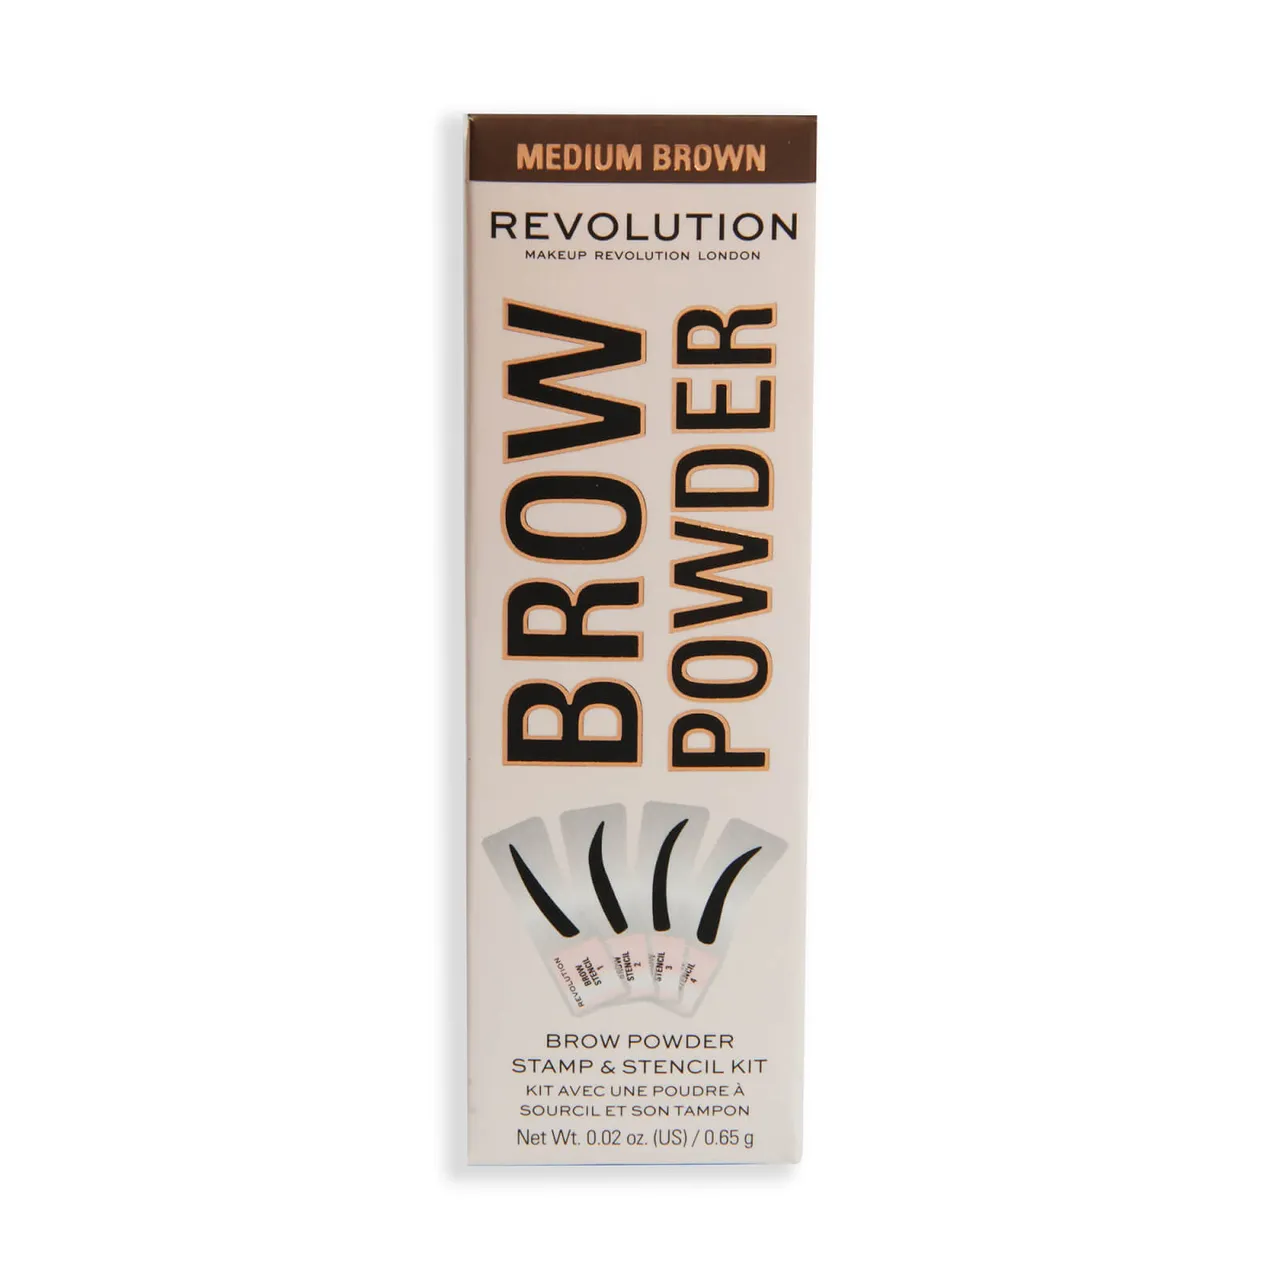 Makeup Revolution Brow Powder Stamp and Stencil Kit (Various Shades) - Medium Brown